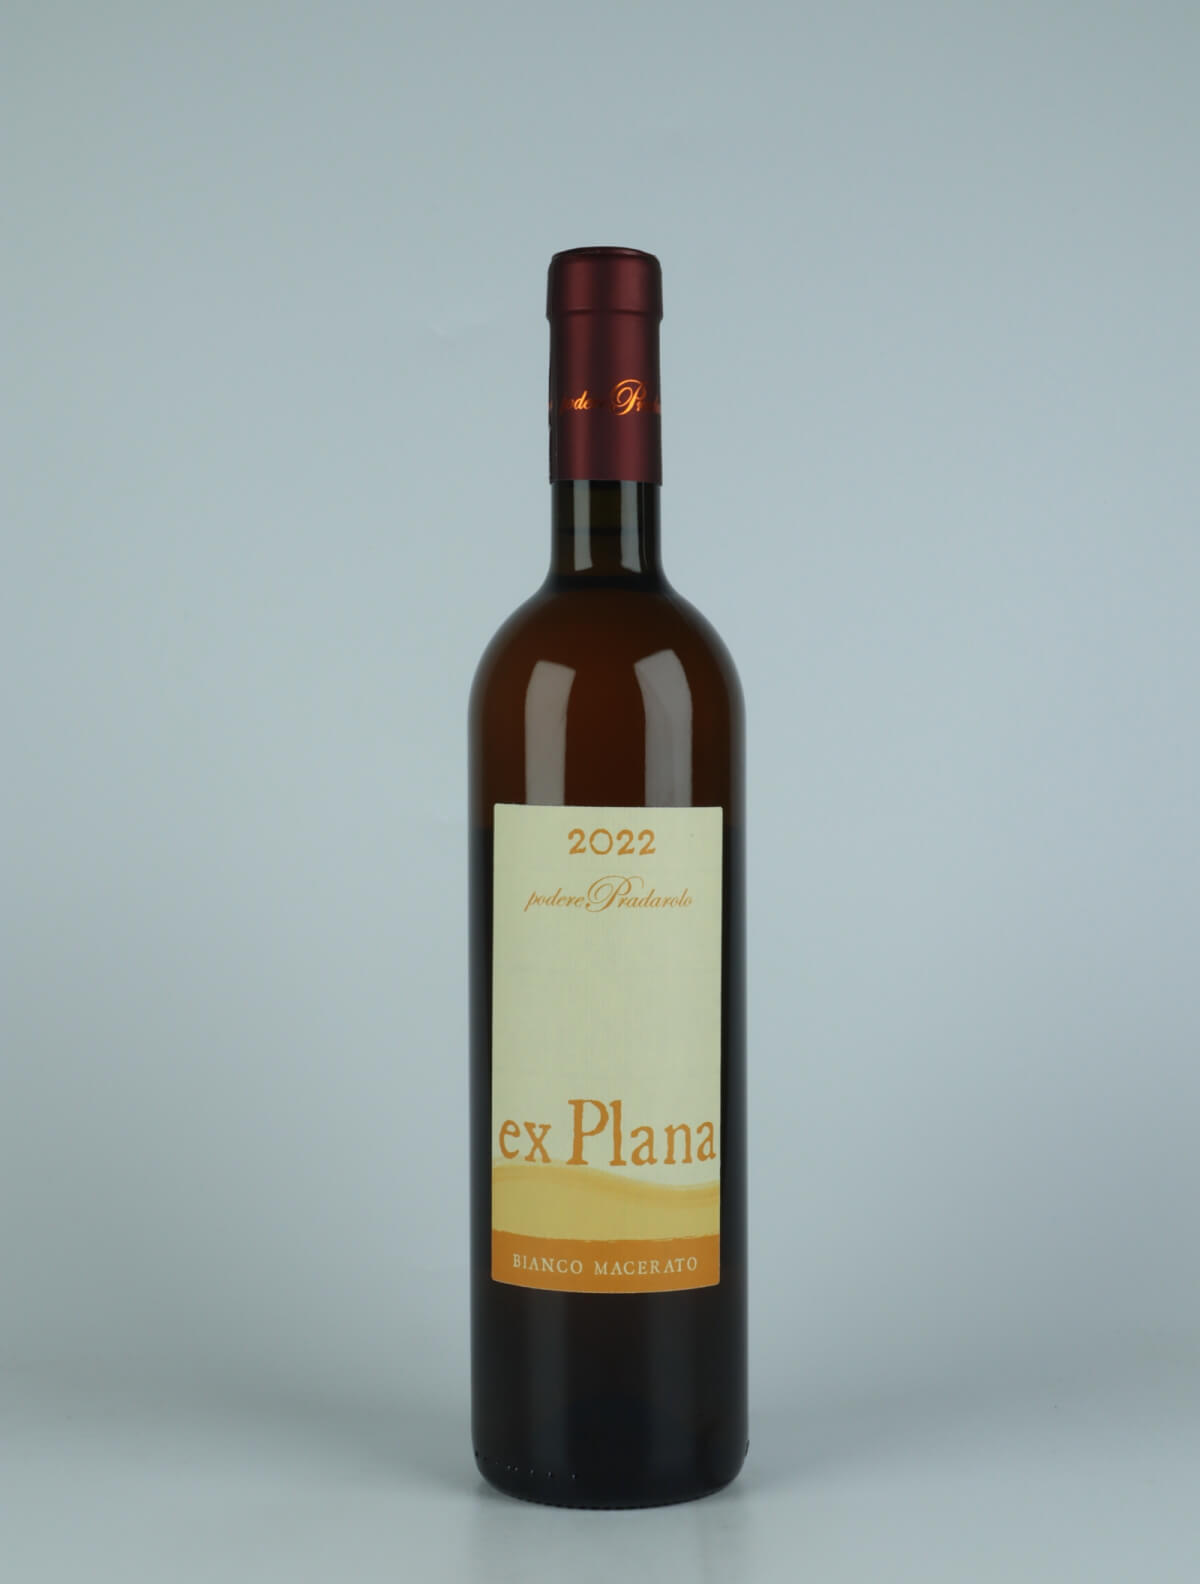 A bottle 2022 Ex Plana Orange wine from Podere Pradarolo, Emilia-Romagna in Italy